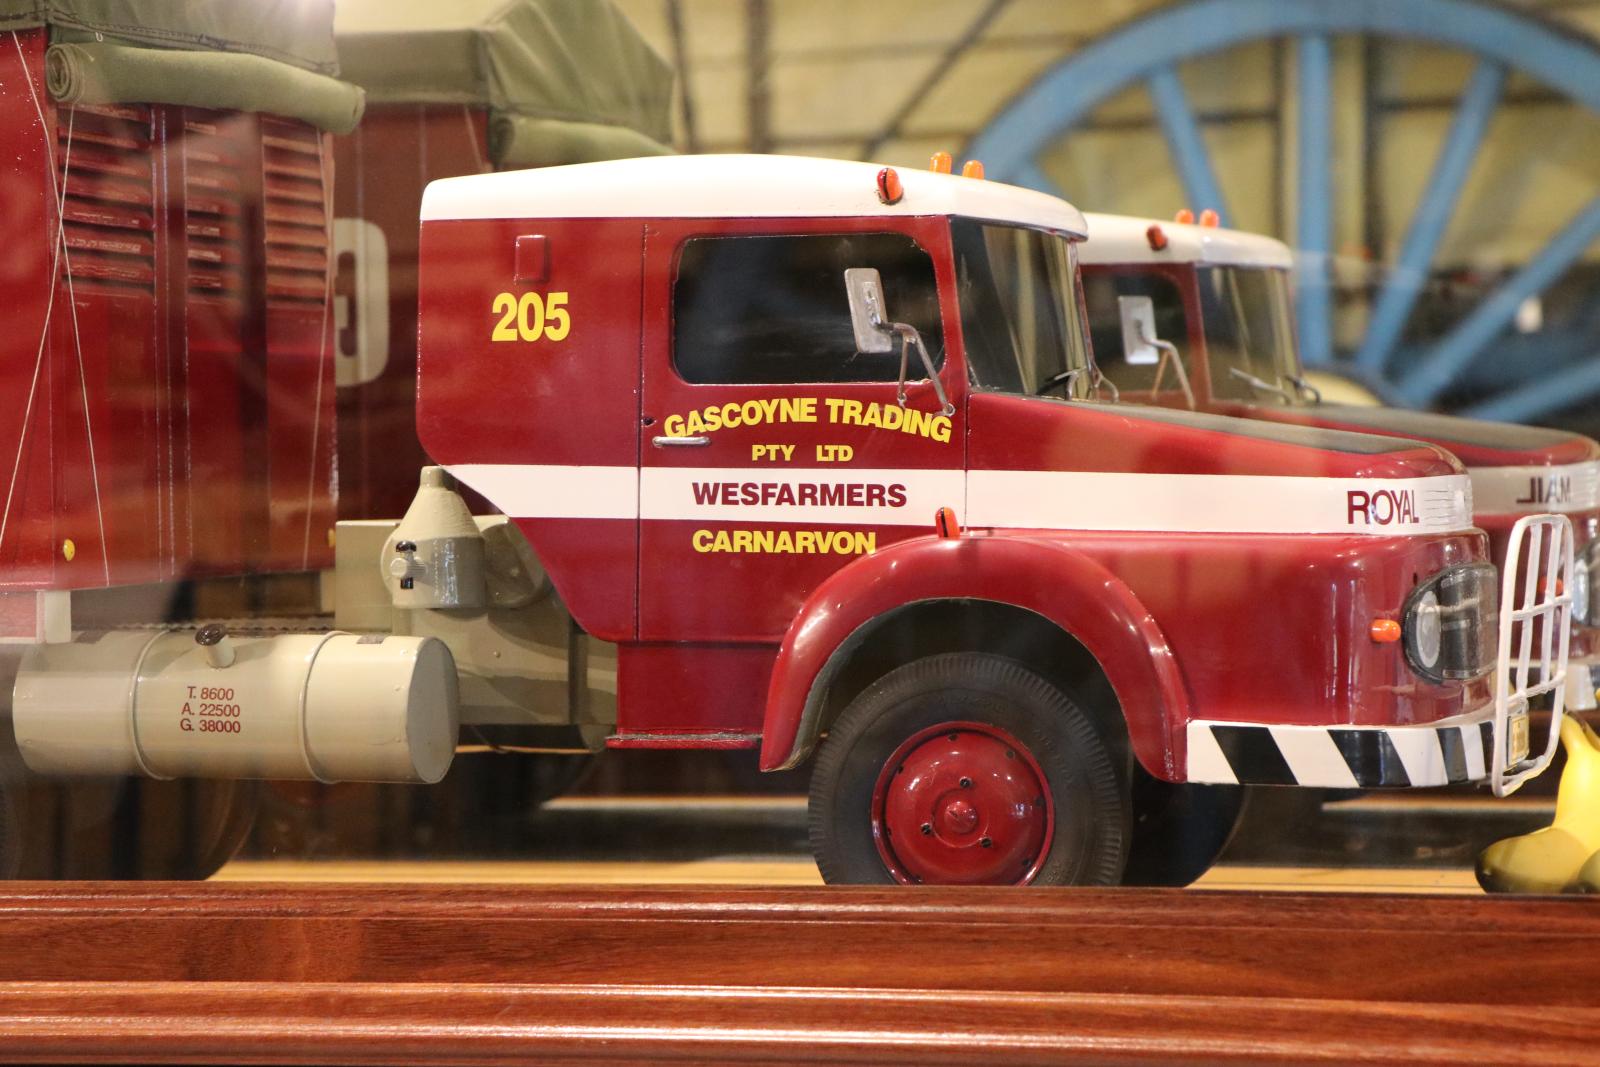 Close up of front of Gascoyne truck with Gascoyne Trading Westfarmers Carnarvon written on side.